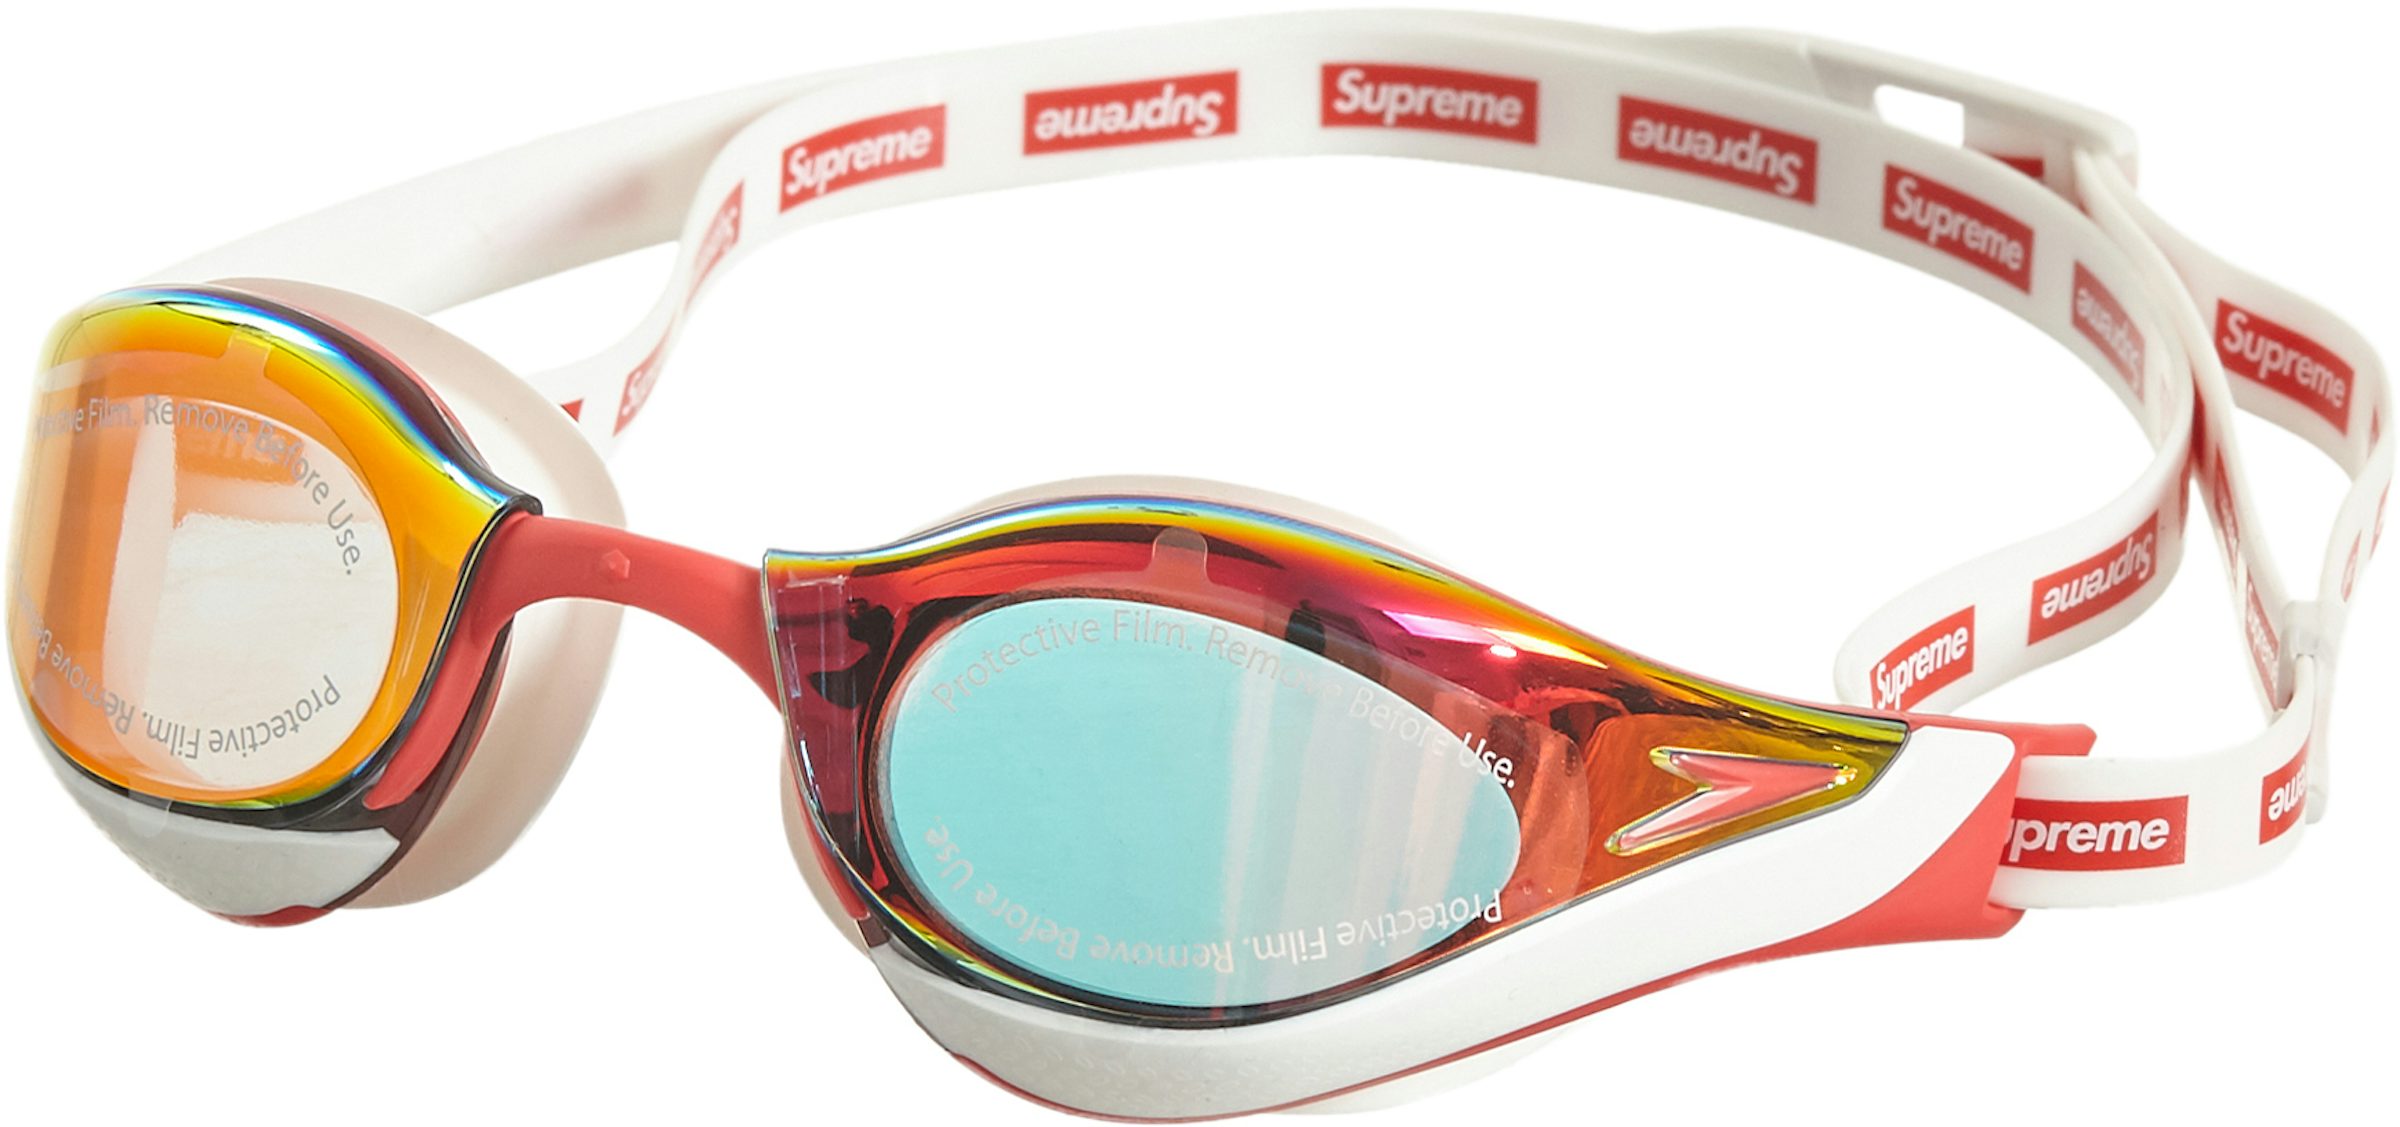 Supreme Speedo Swim Goggles White - SS20 - US